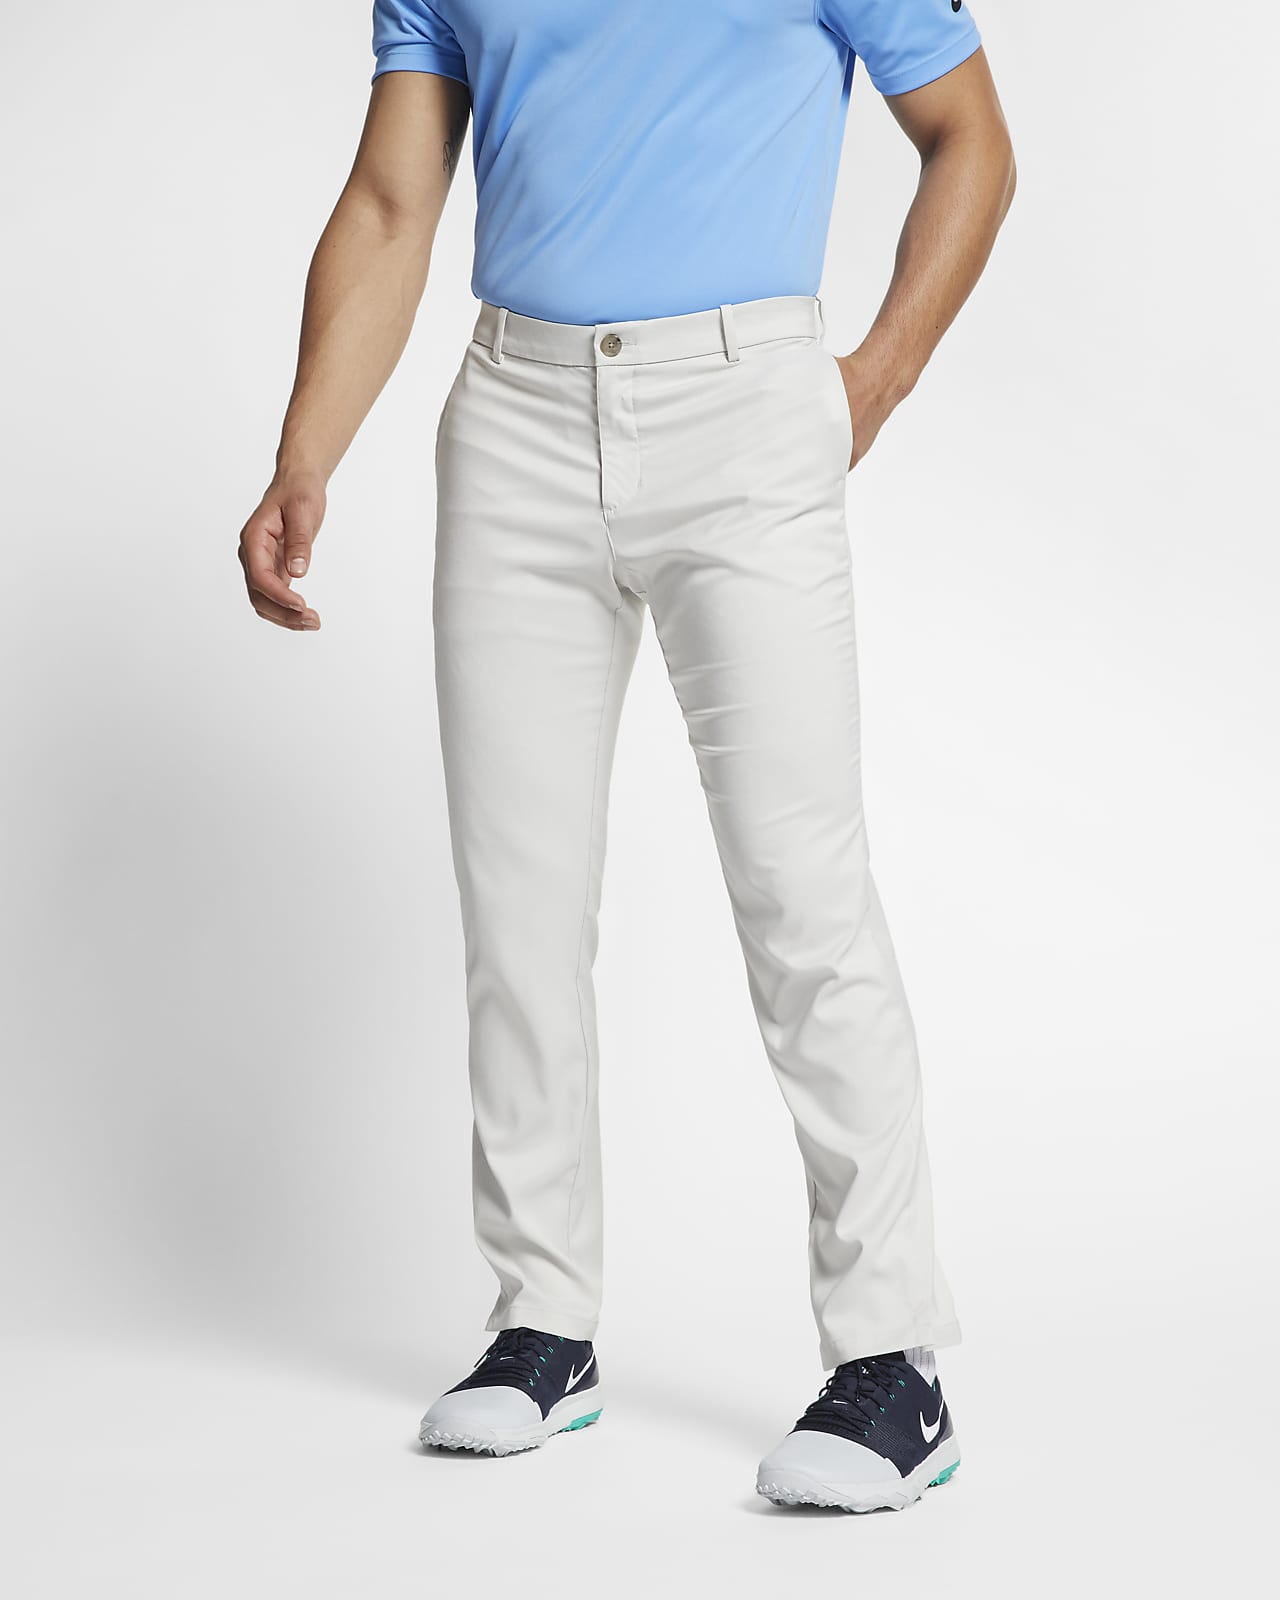 nike men's slim fit 6 pocket flex golf pants